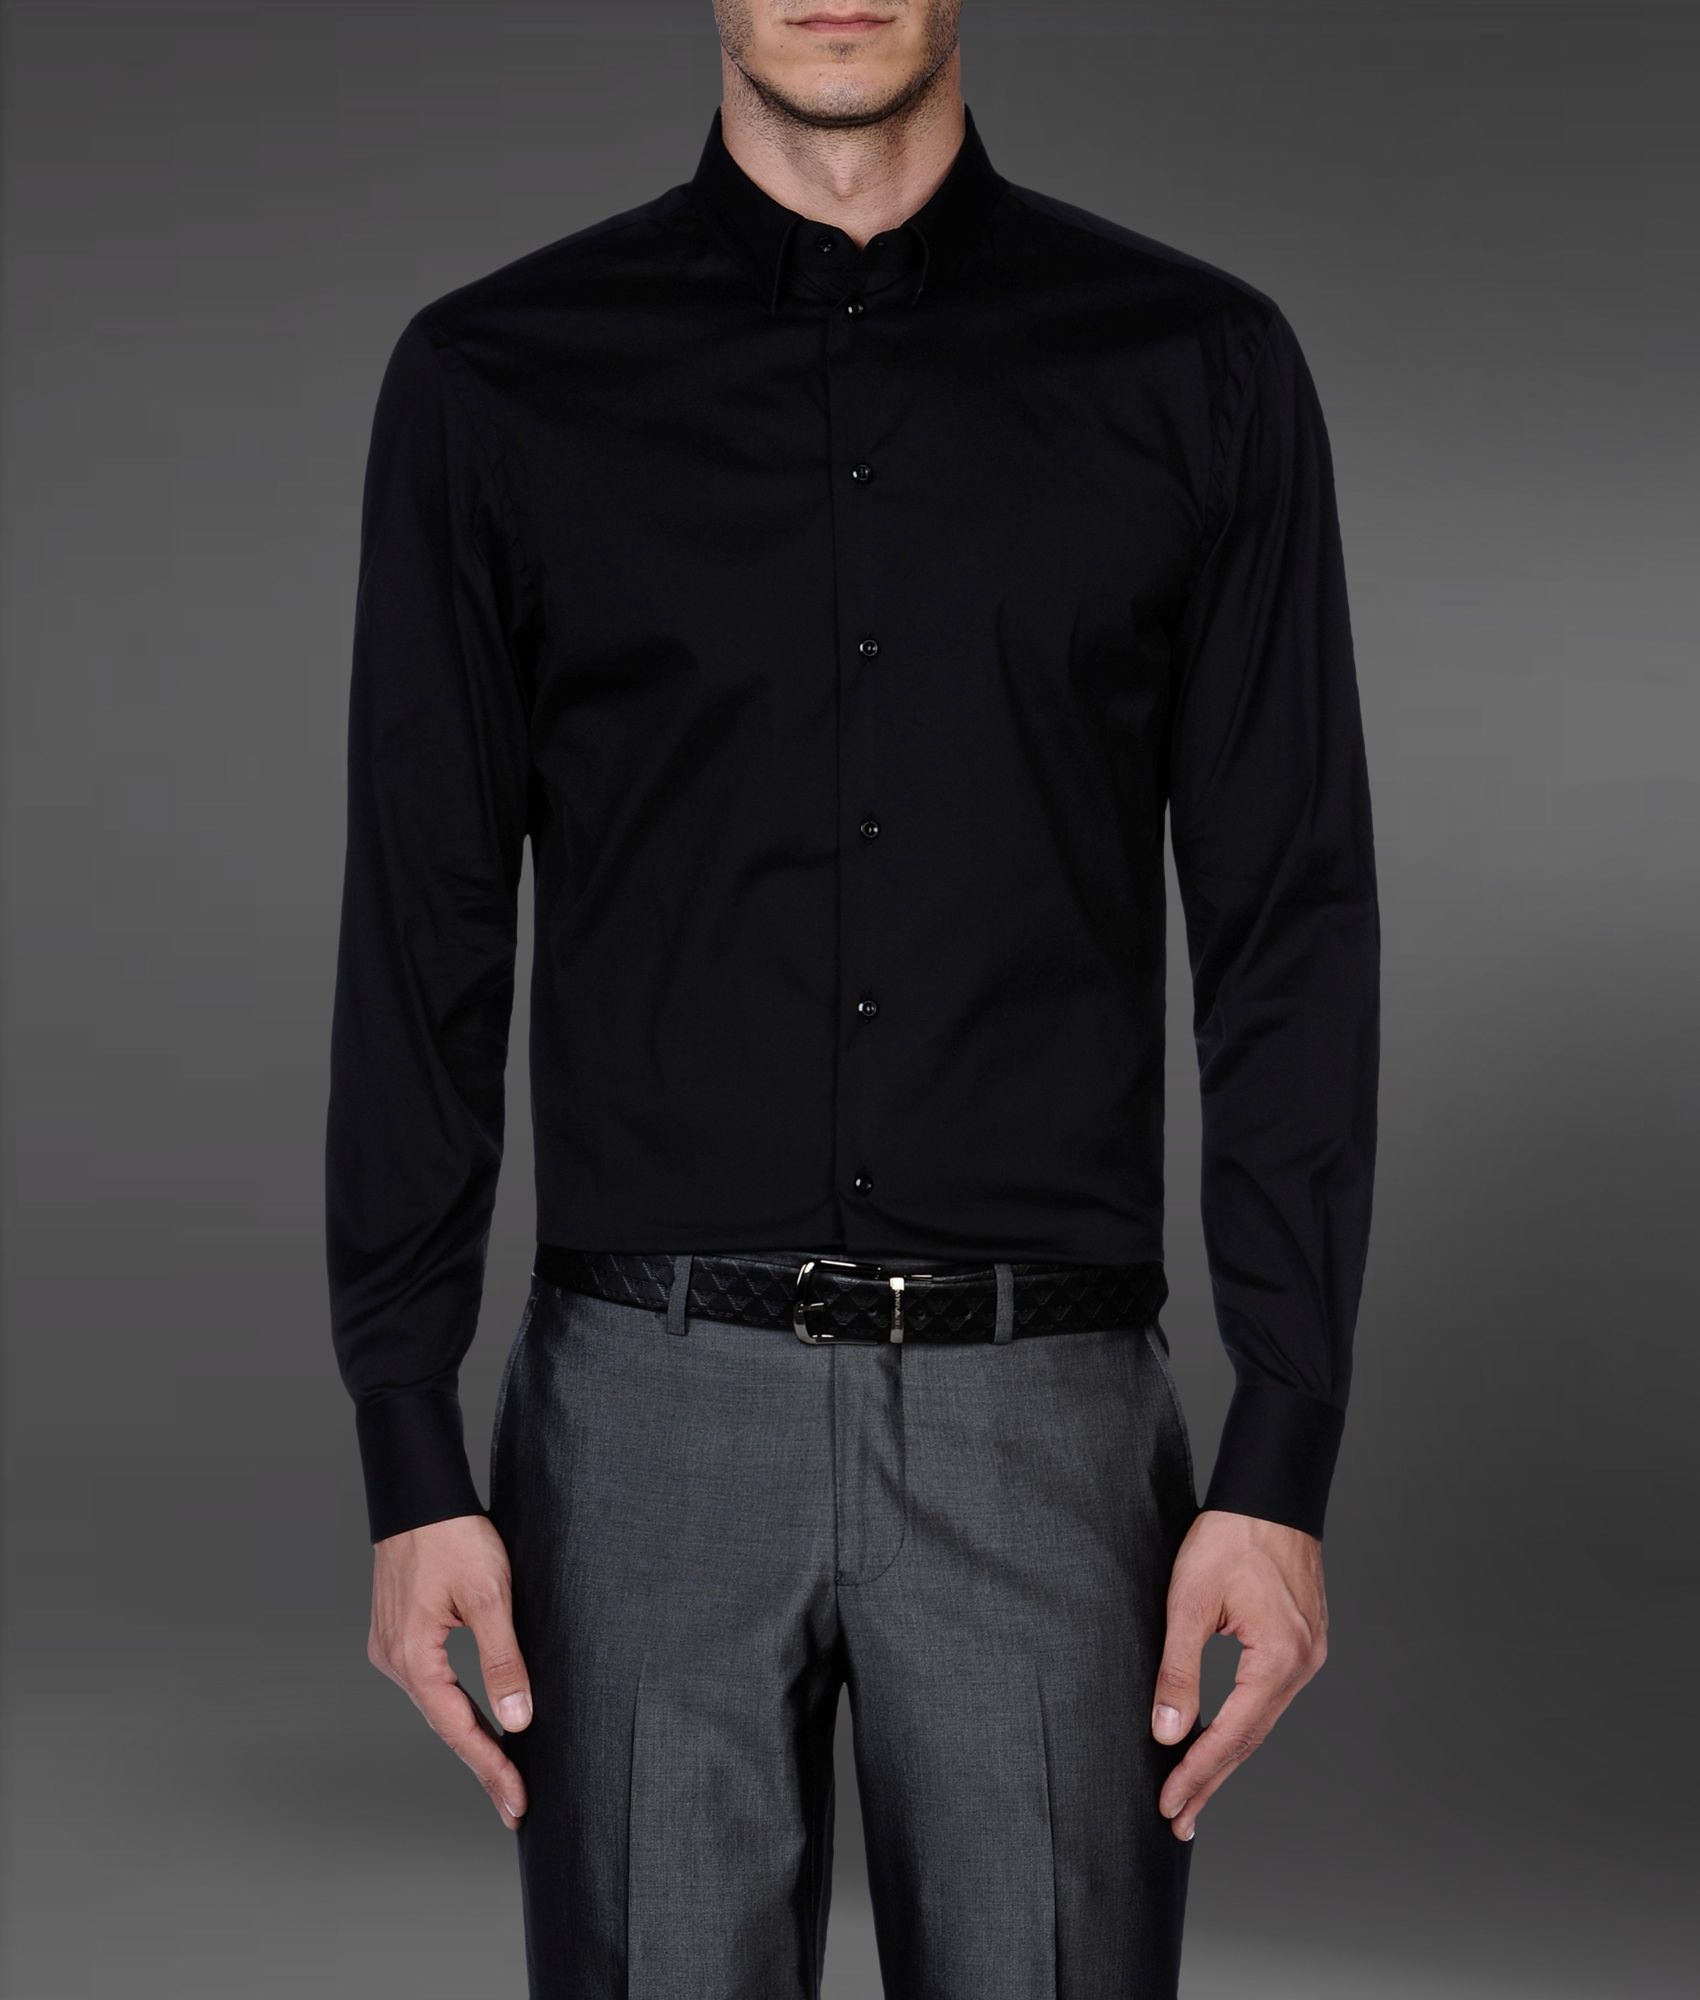 giorgio armani black shirt